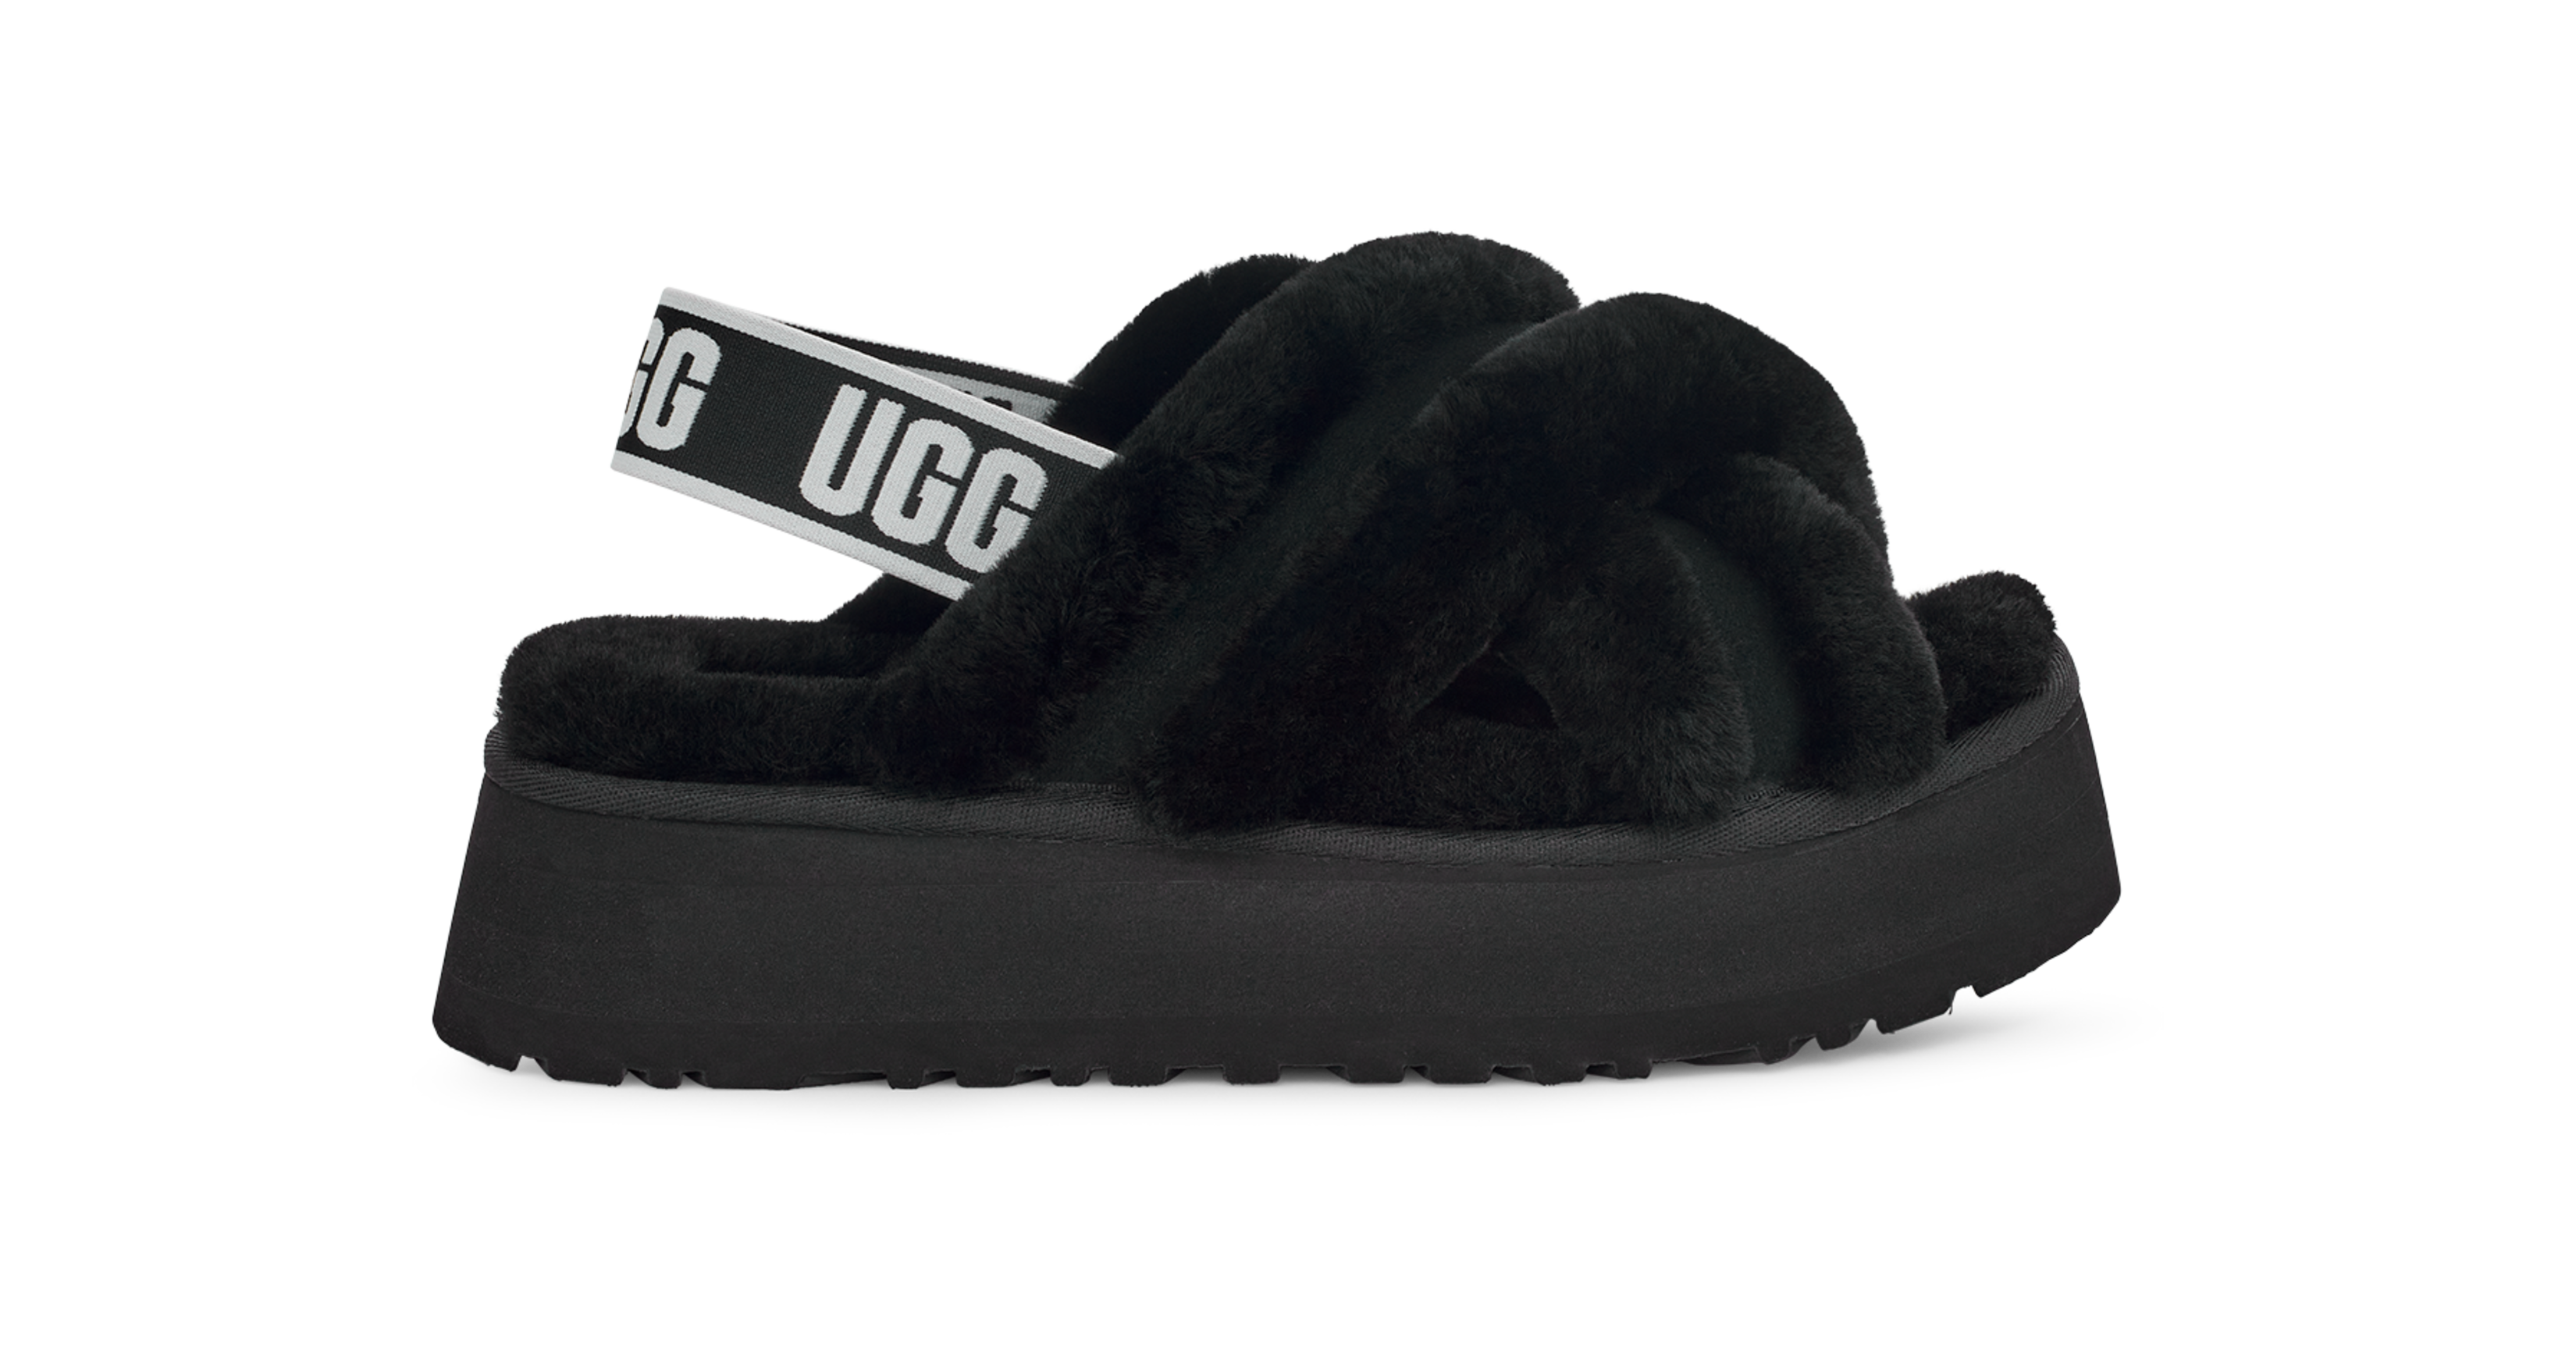 Postgrado | Women's UGG Tasman Chestnut Shoes Slippers Sandals 100%  Authentic *IN HAND*